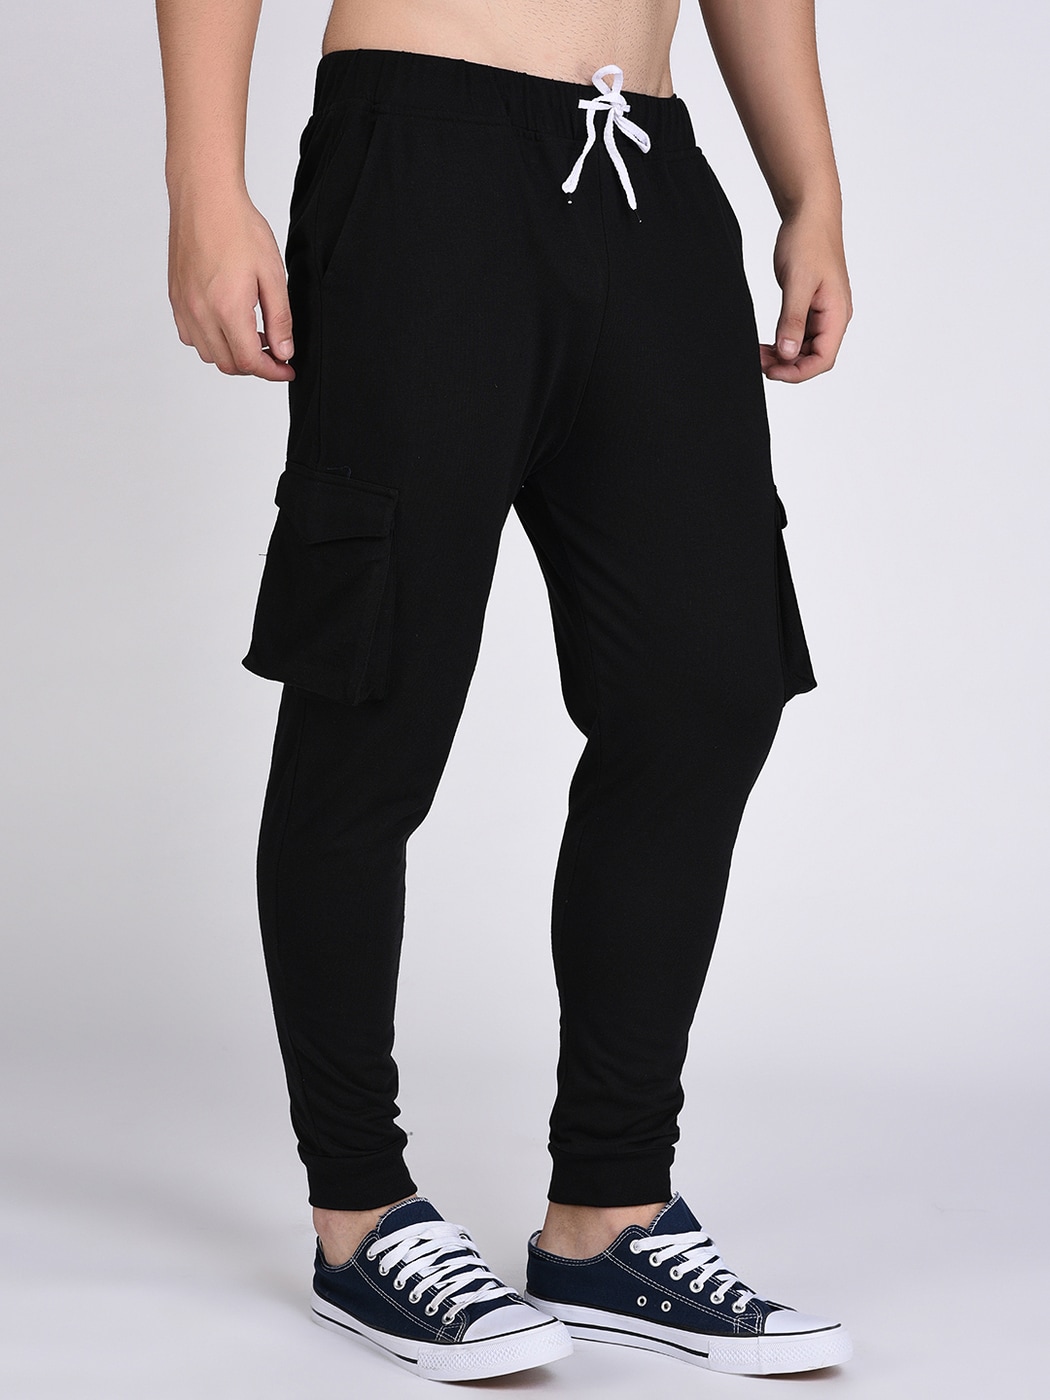 Buy Black Trousers & Pants for Men by RIGO Online